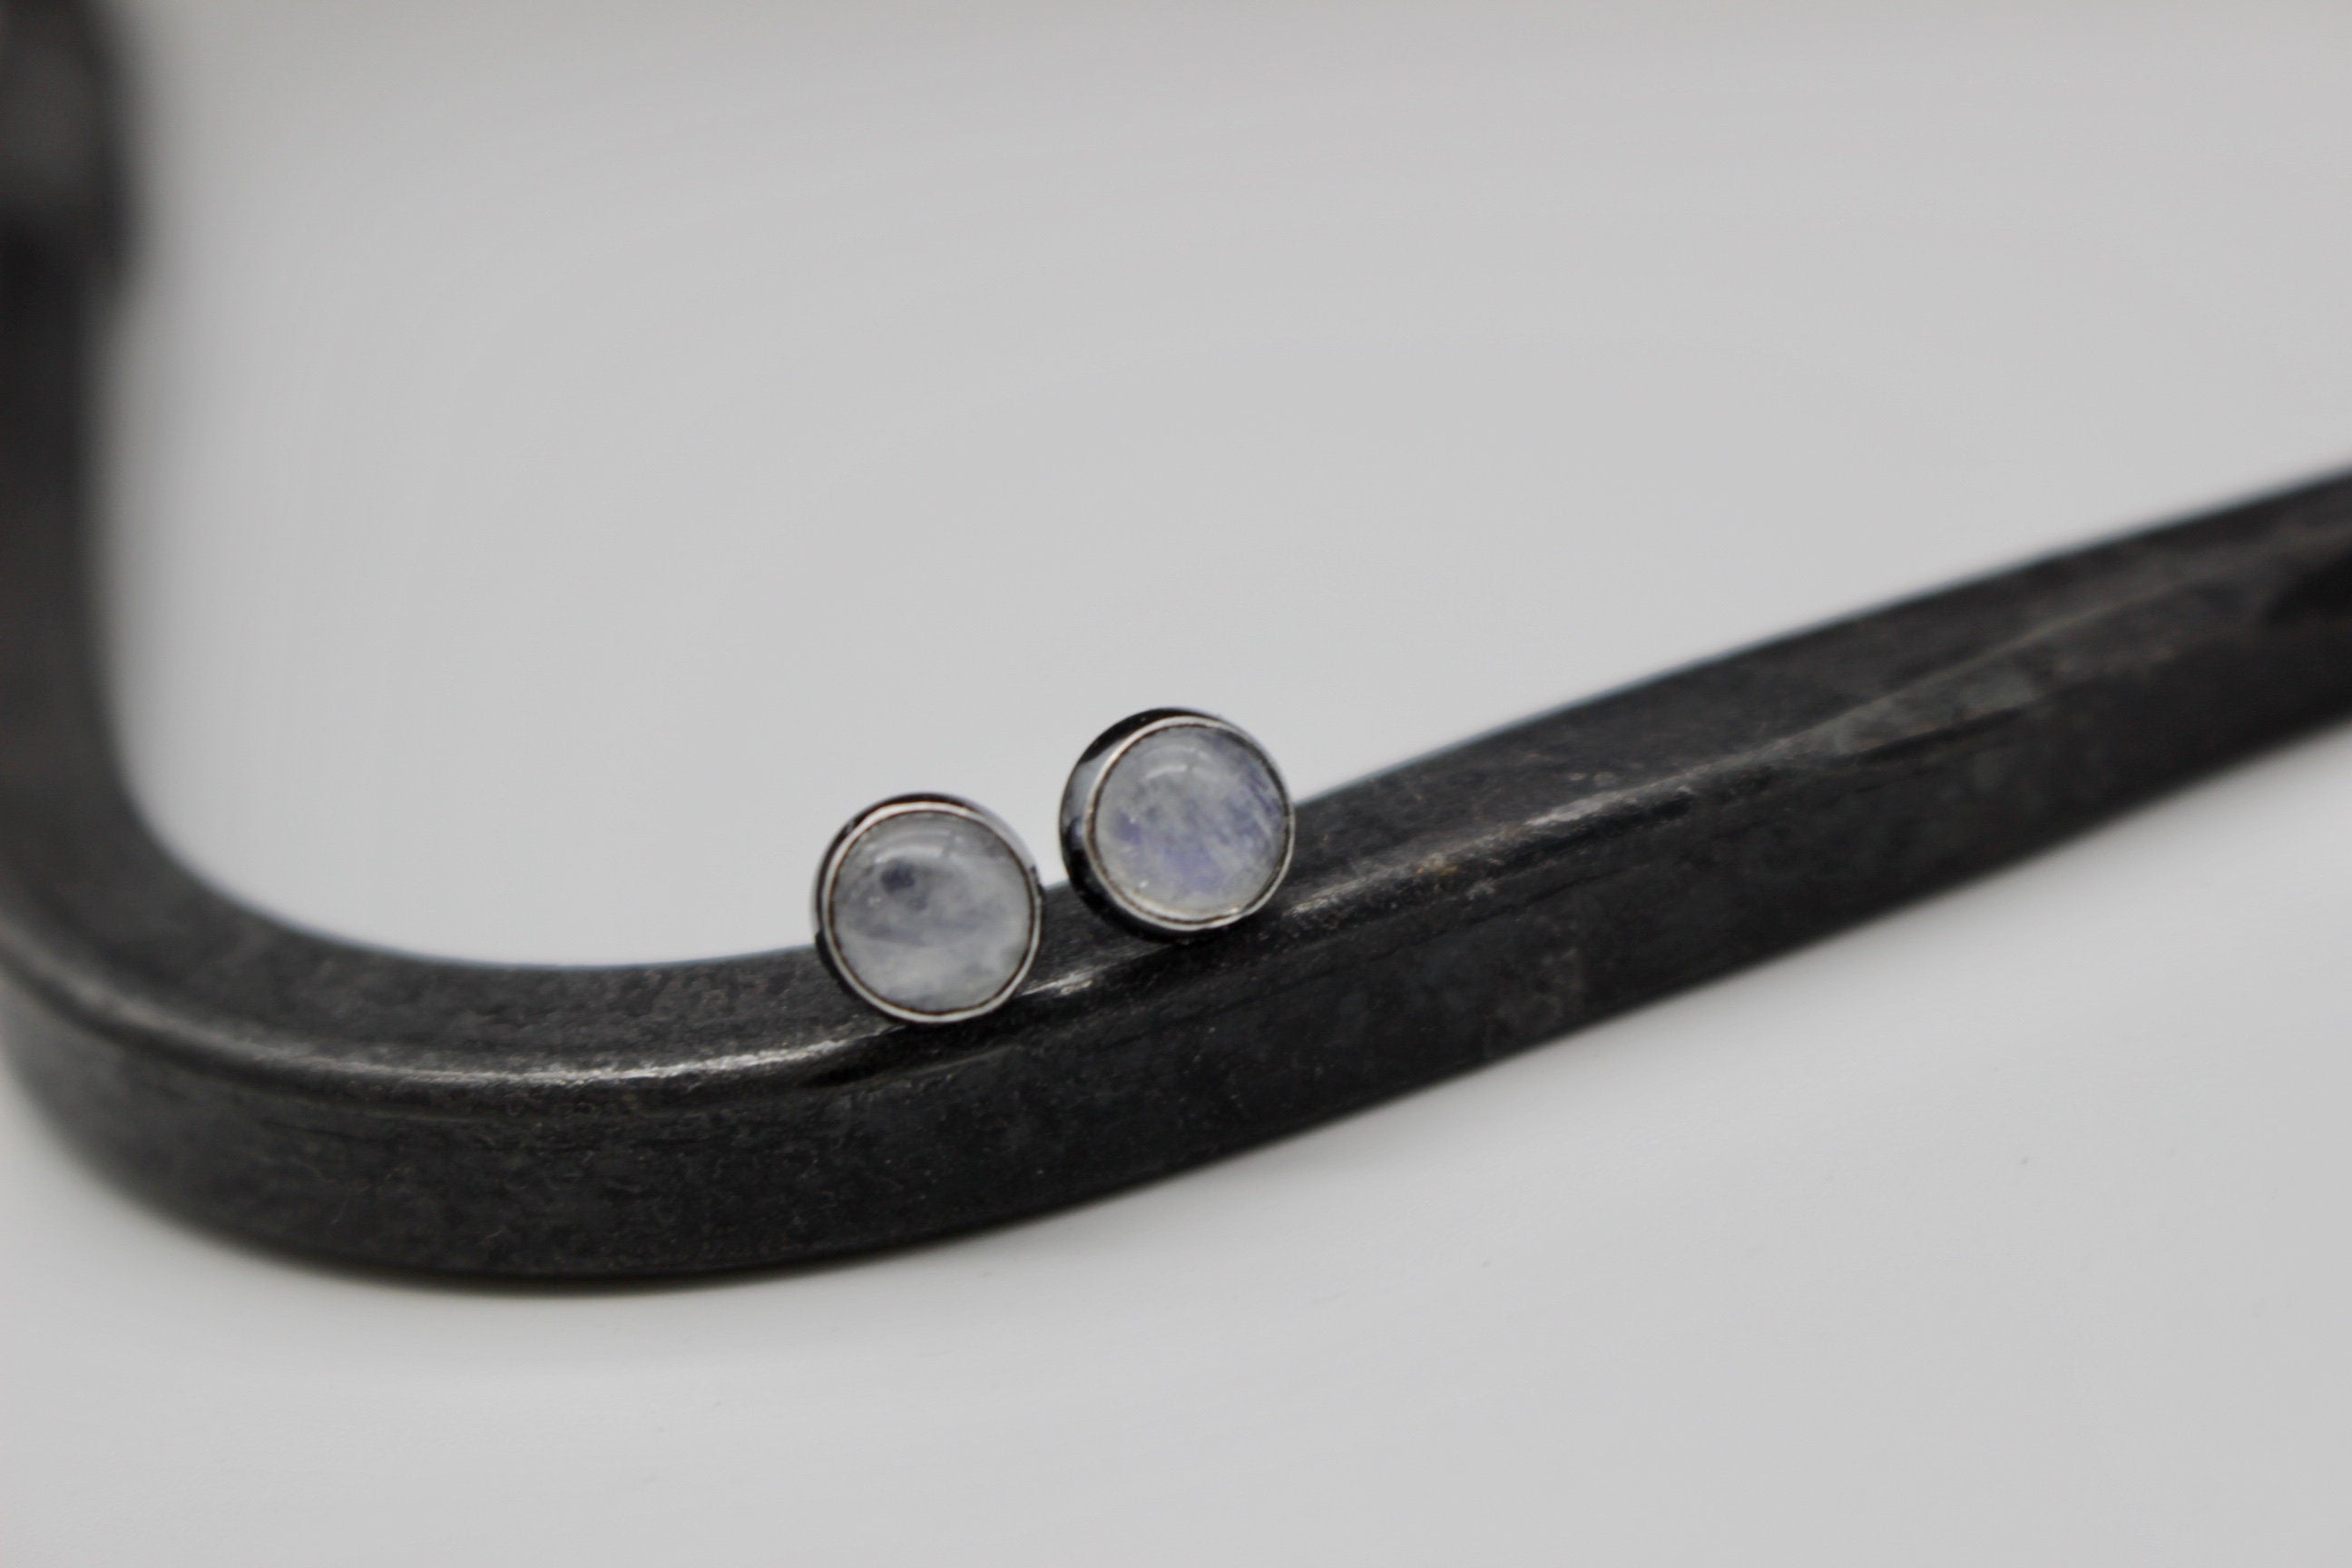 Rainbow moonstone stud earrings - Sterling Silver Earrings - 5mm Studs - gift for her - jewelry sale - minimalist